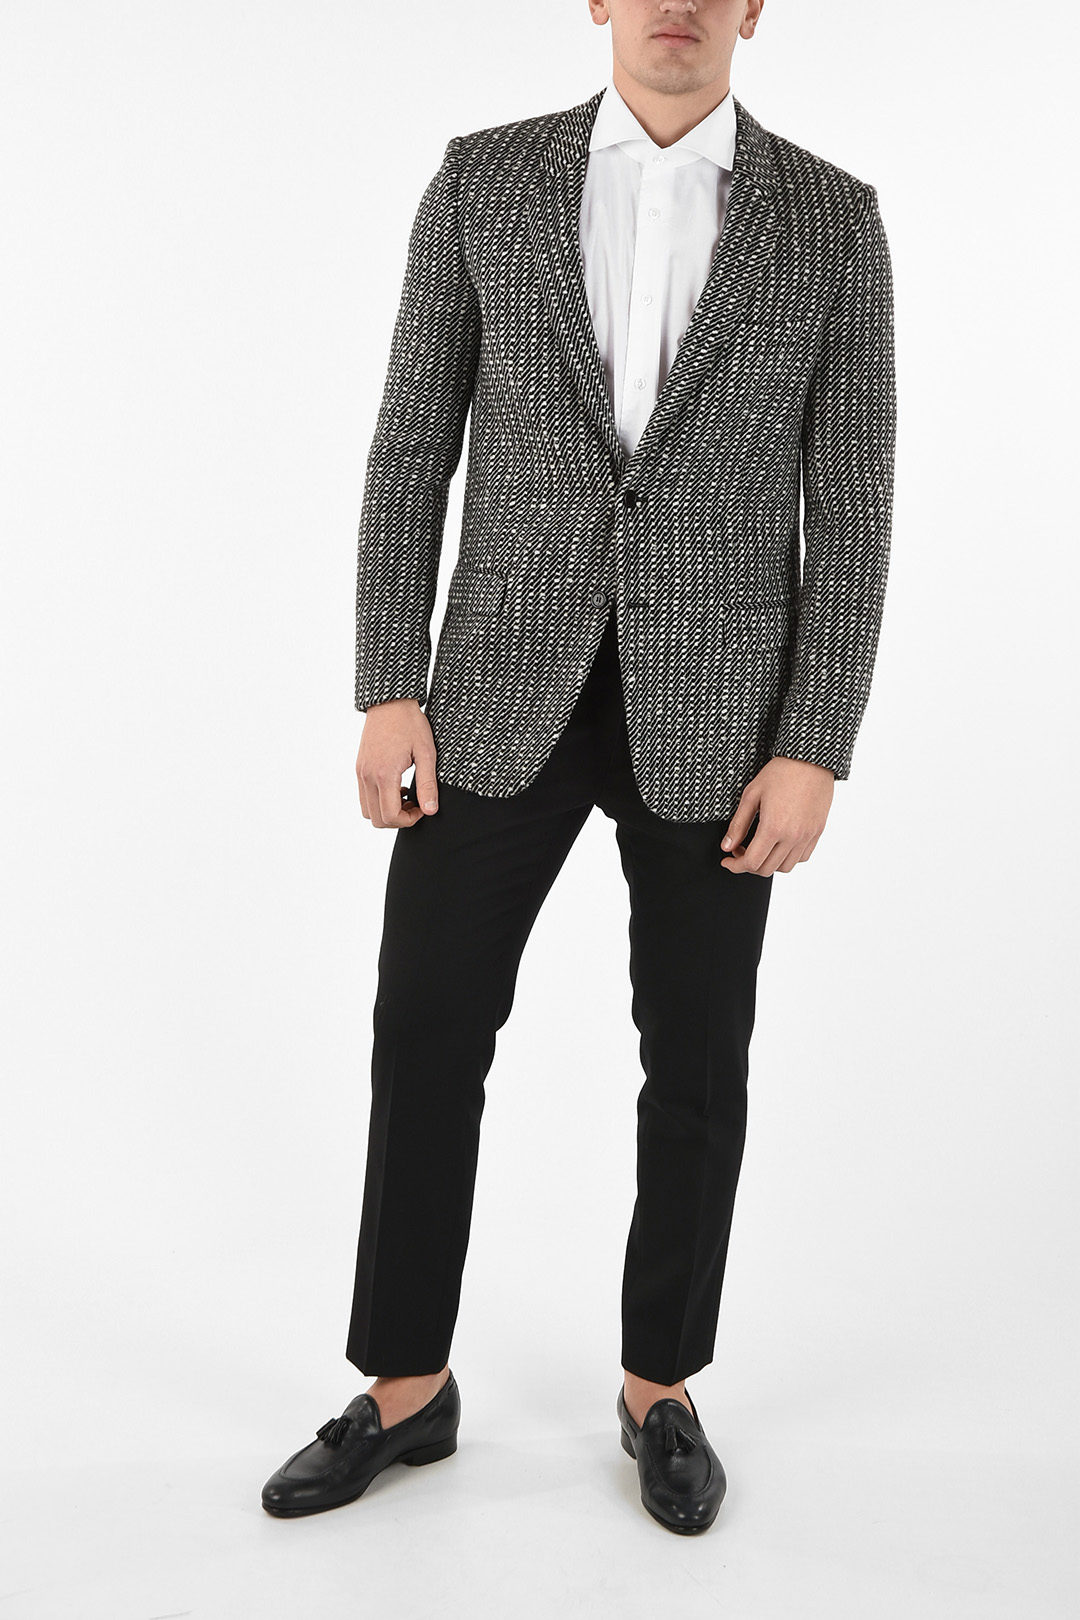 NEW VTG Yves Saint Laurent Men's Tweed 2-Button Blazer Beige • 40 R